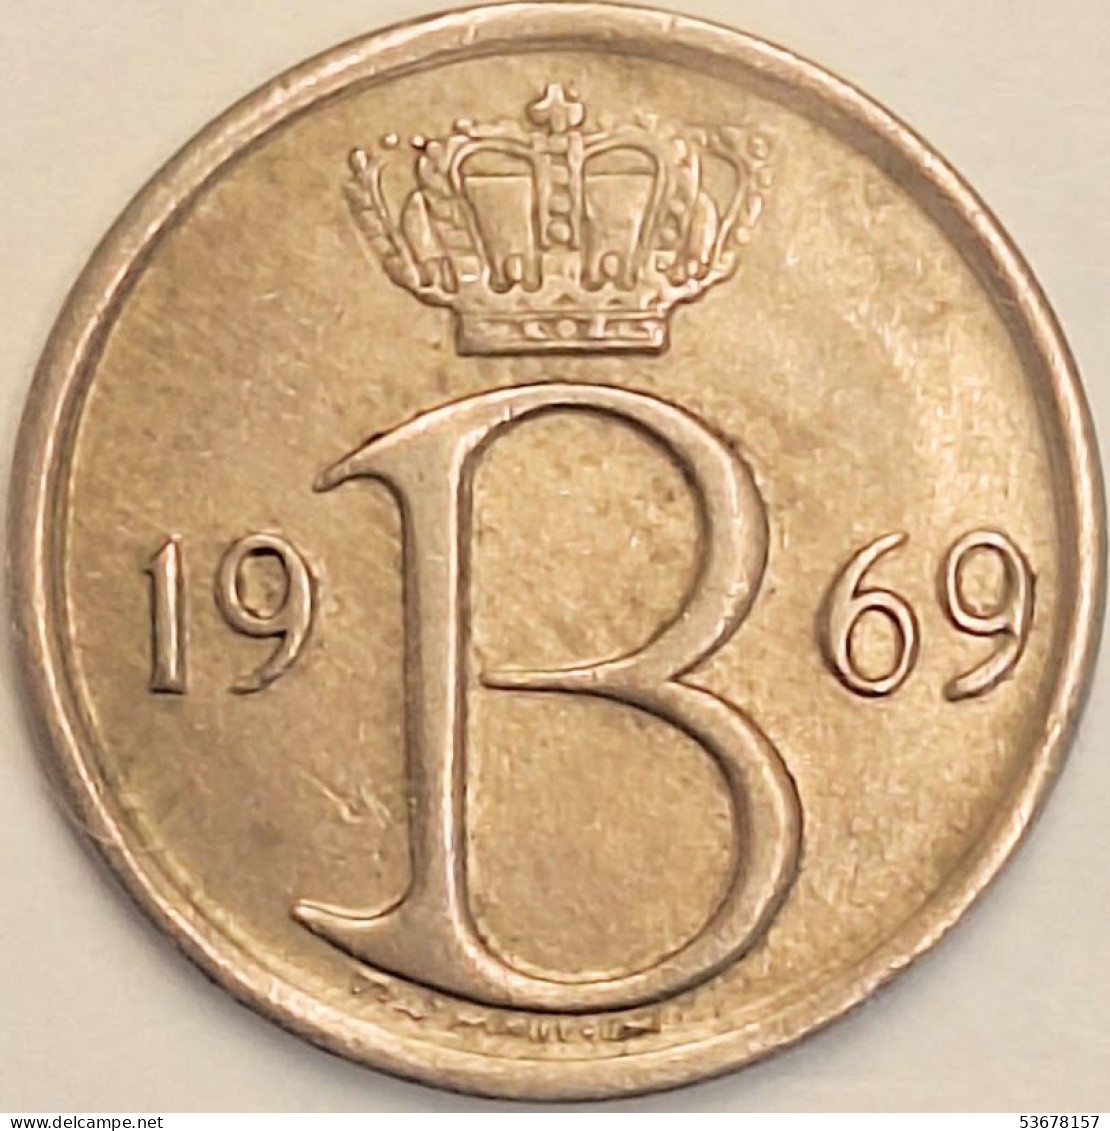 Belgium - 25 Centimes 1969, KM# 154.1 (#3085) - 25 Centimes